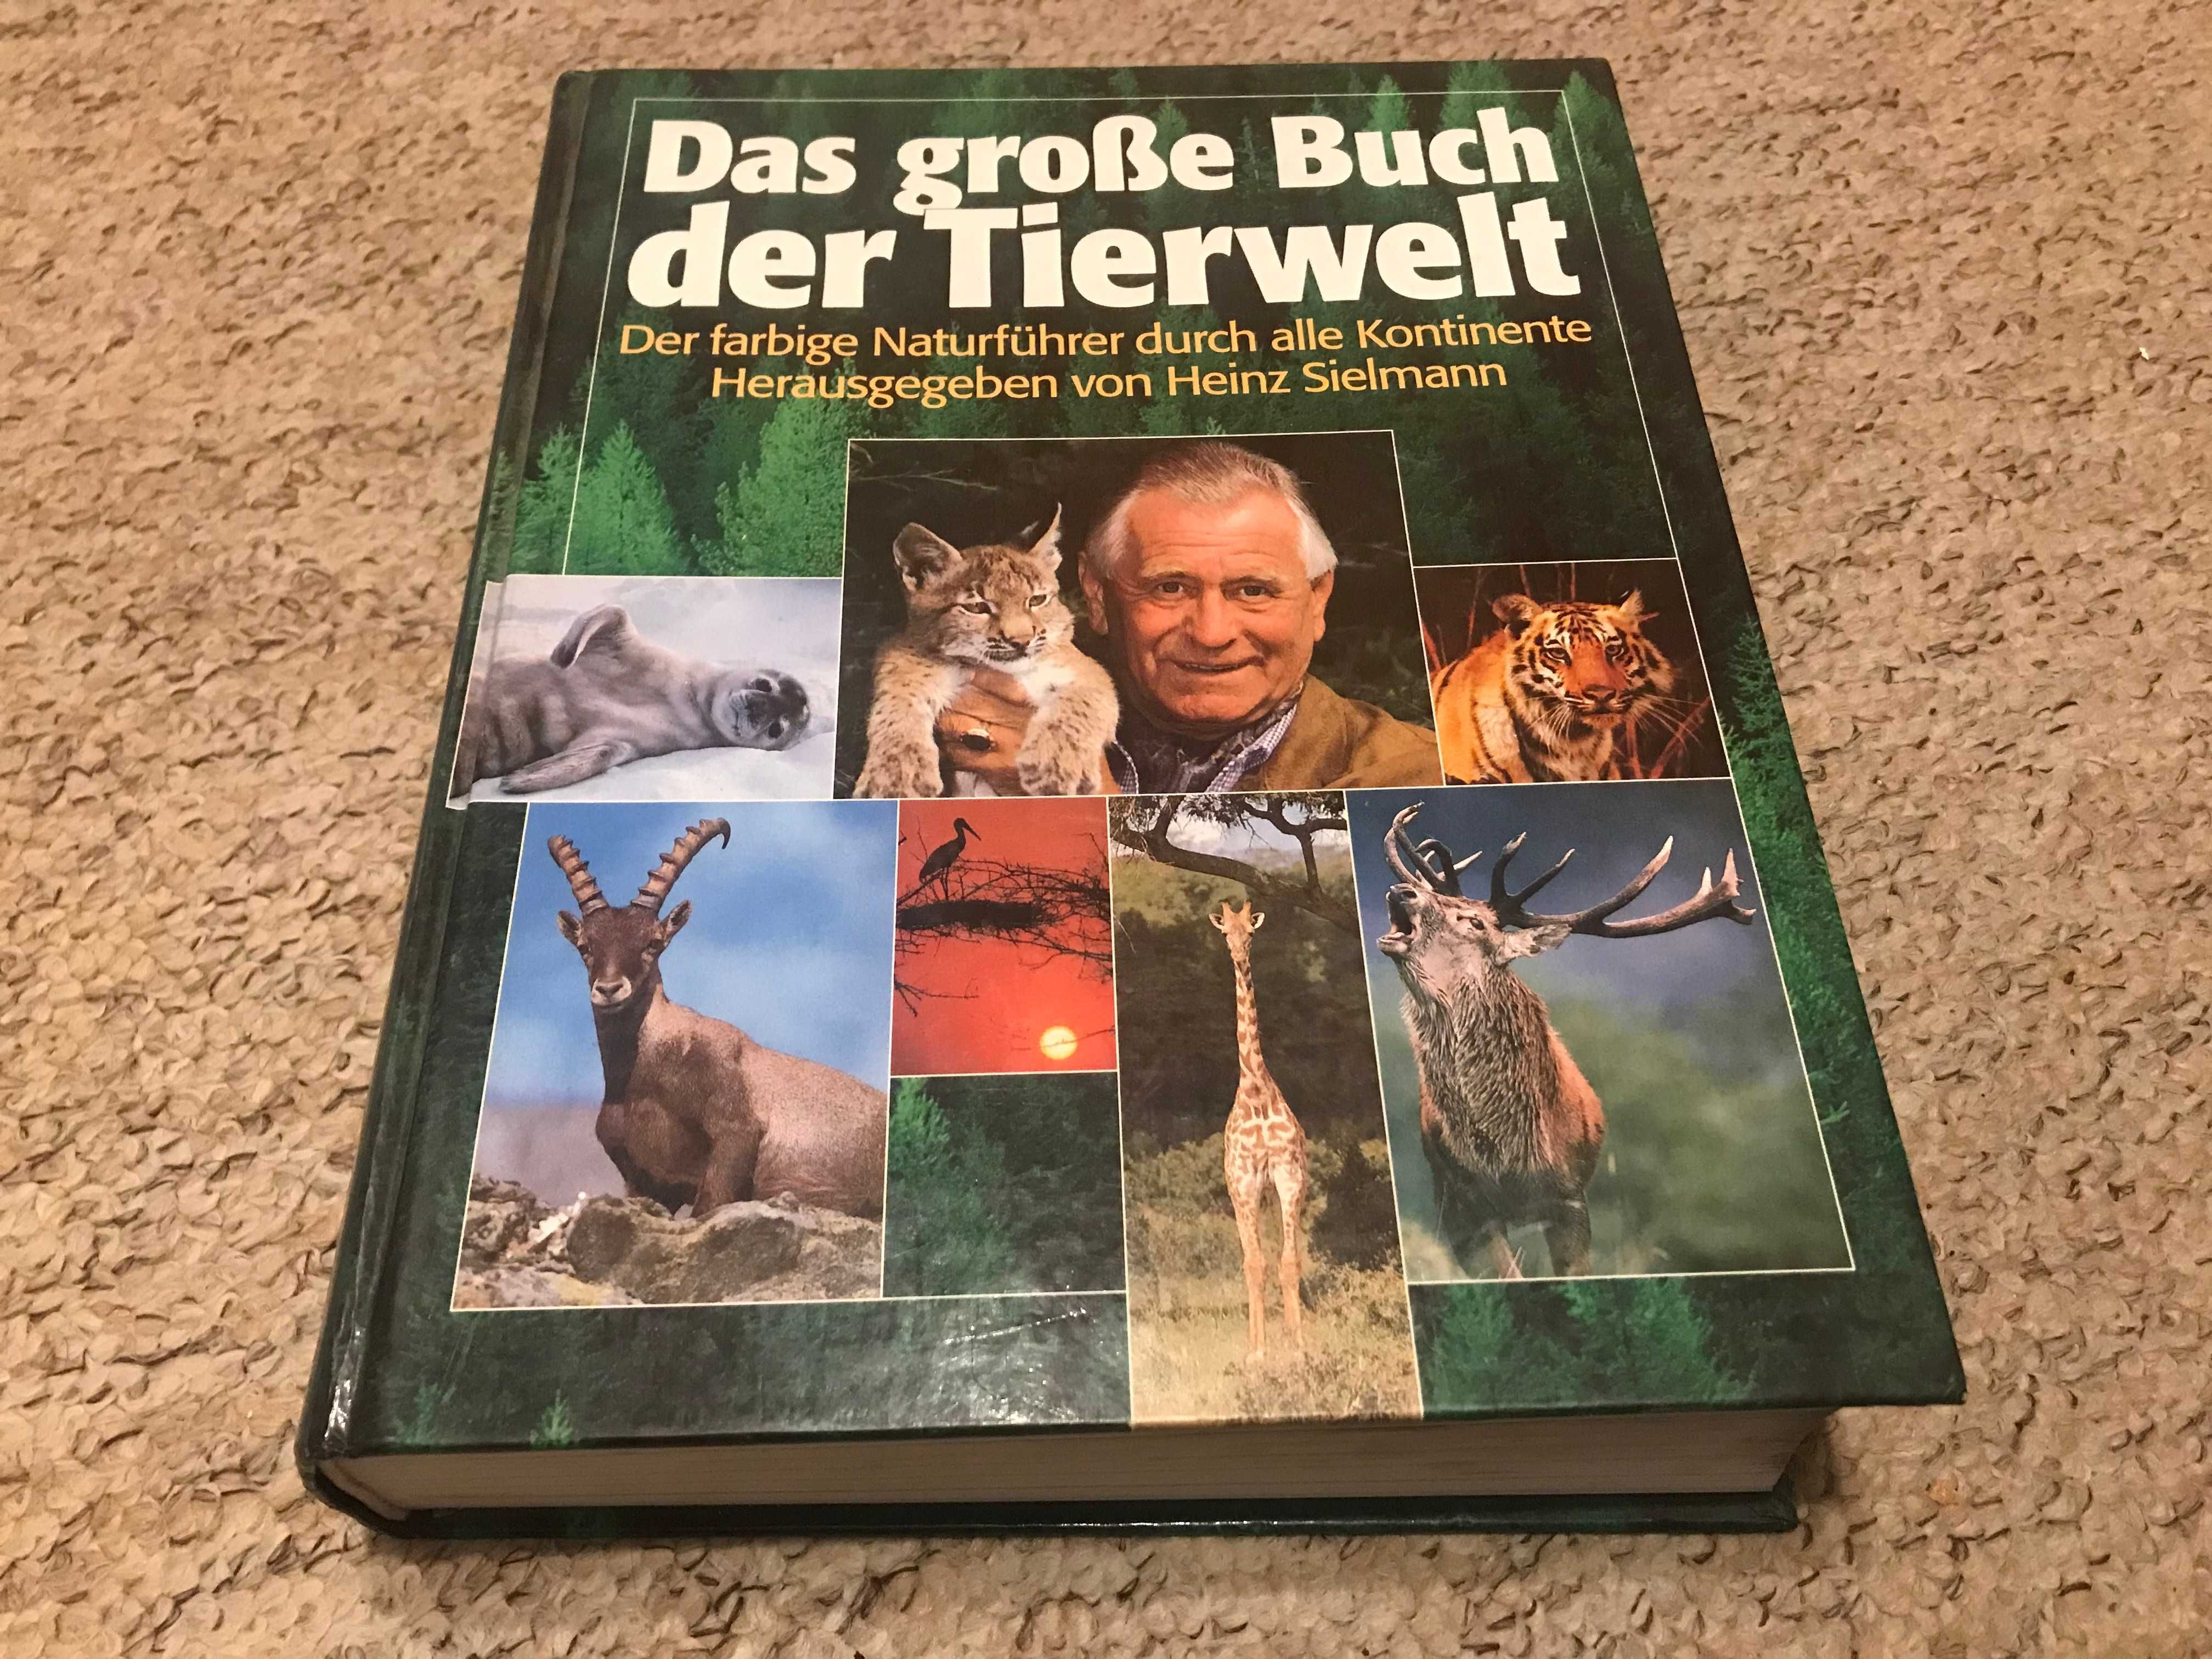 Wielka księga świata zwierząt Das große Buch der Tierwelt